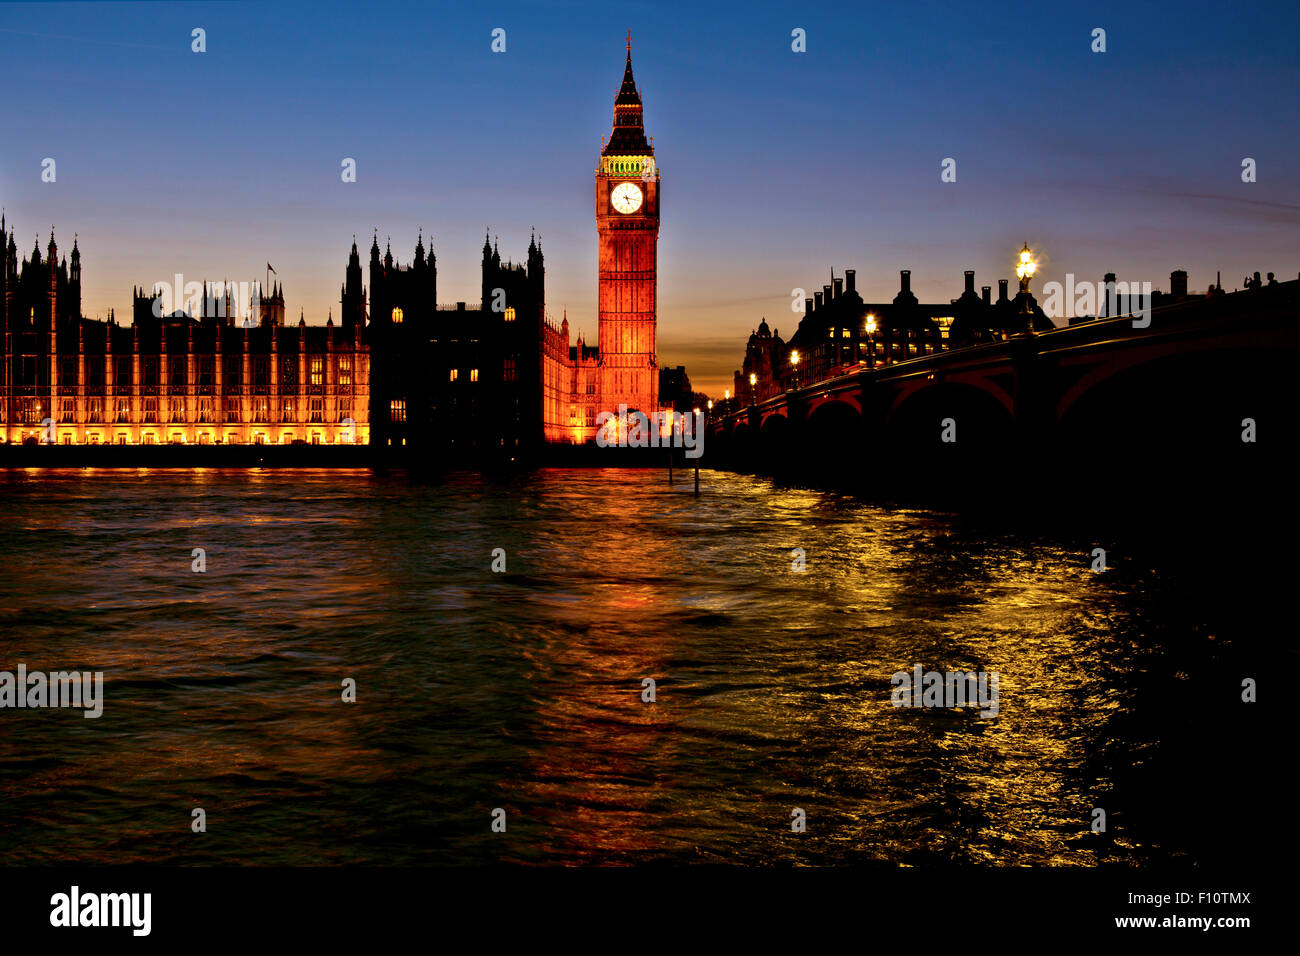 Big Ben London UK capital city clock tower Britain at night Stock Photo